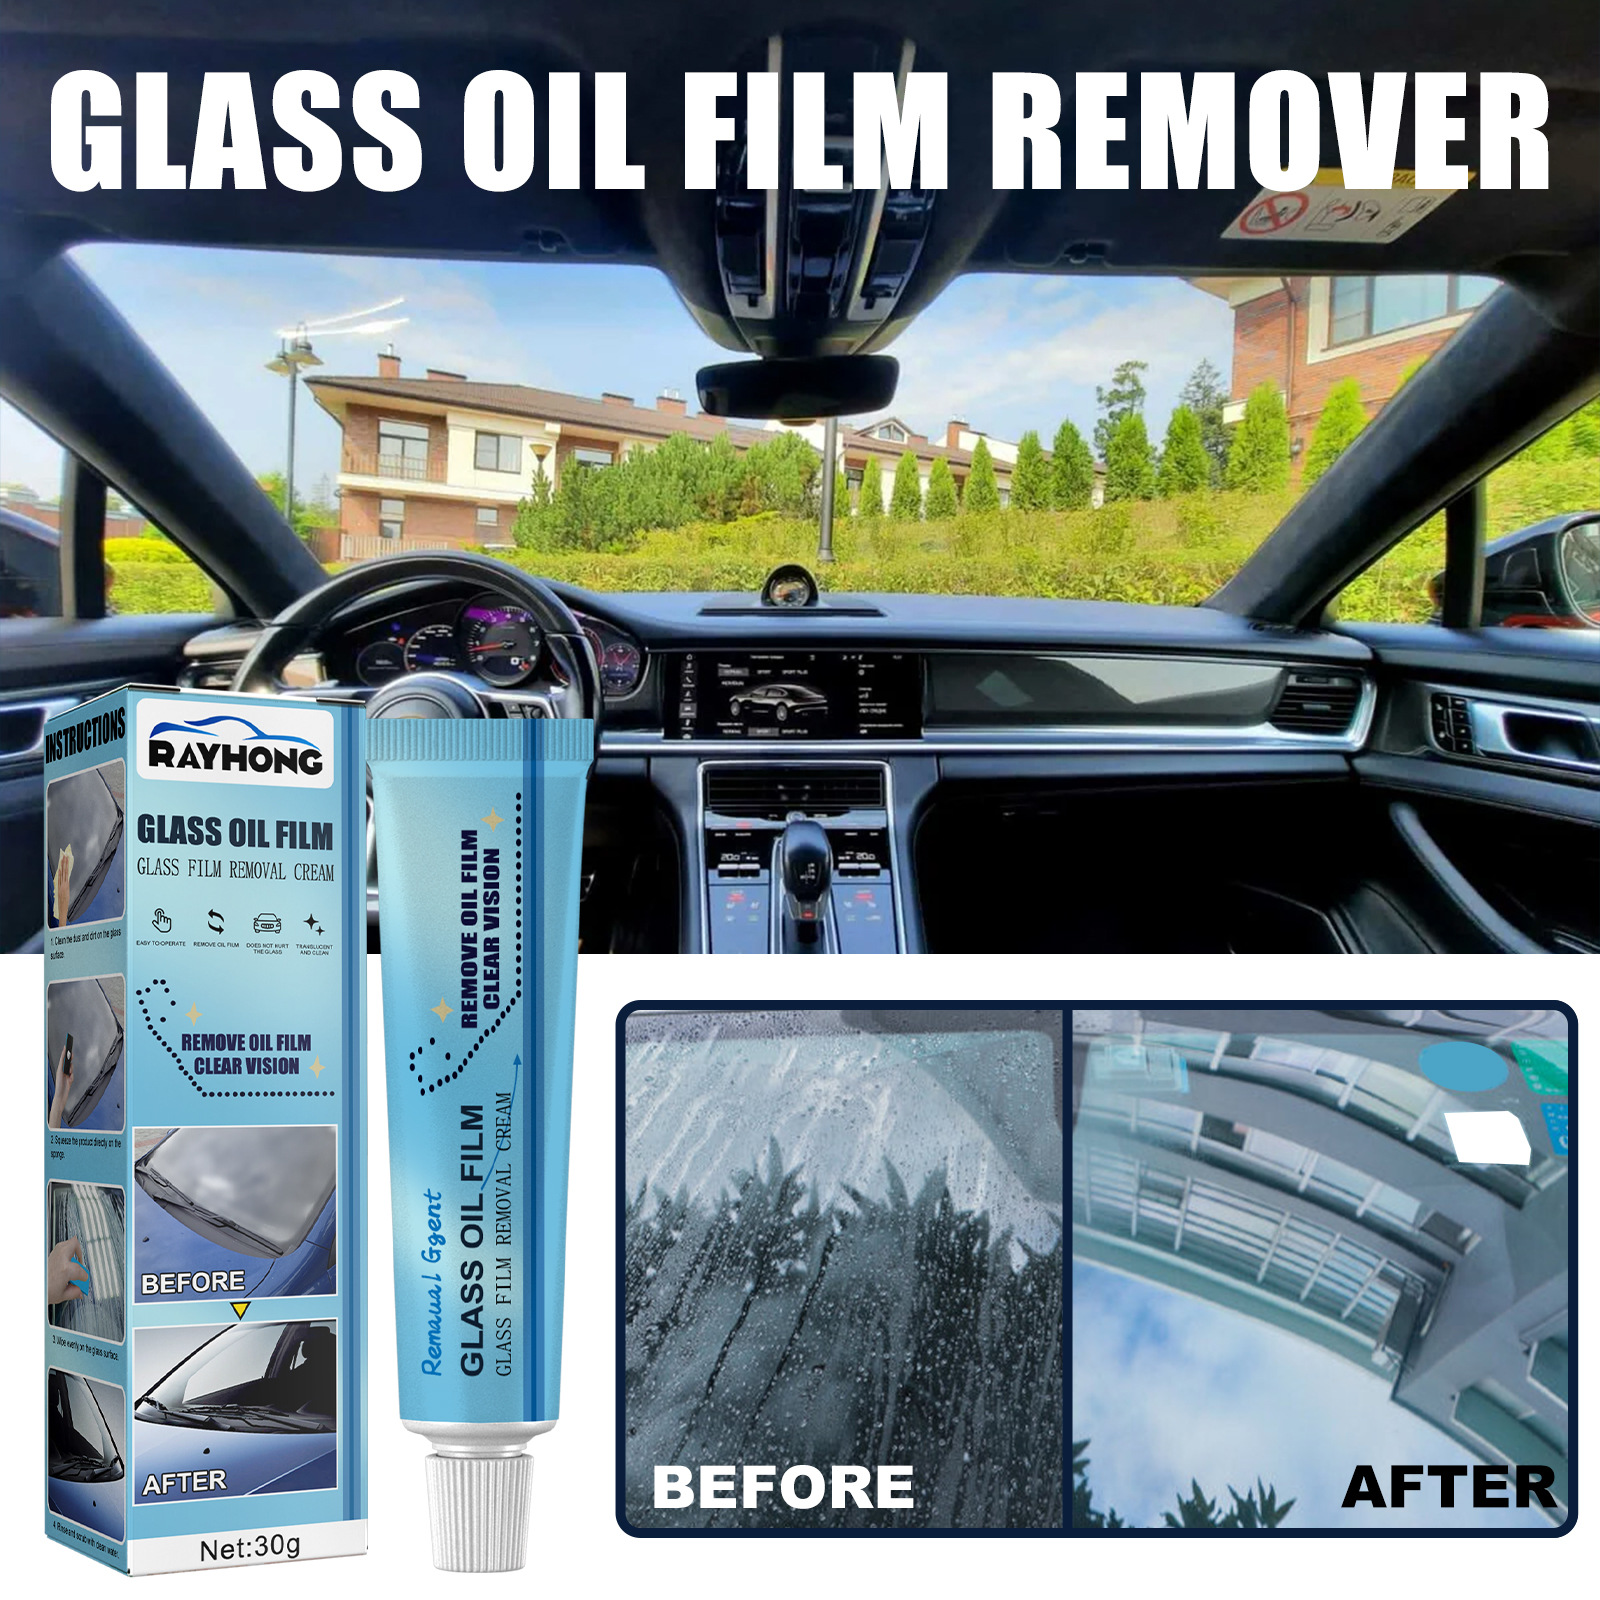 Home Fashion Car Glass Oil Film Remover - CJdropshipping